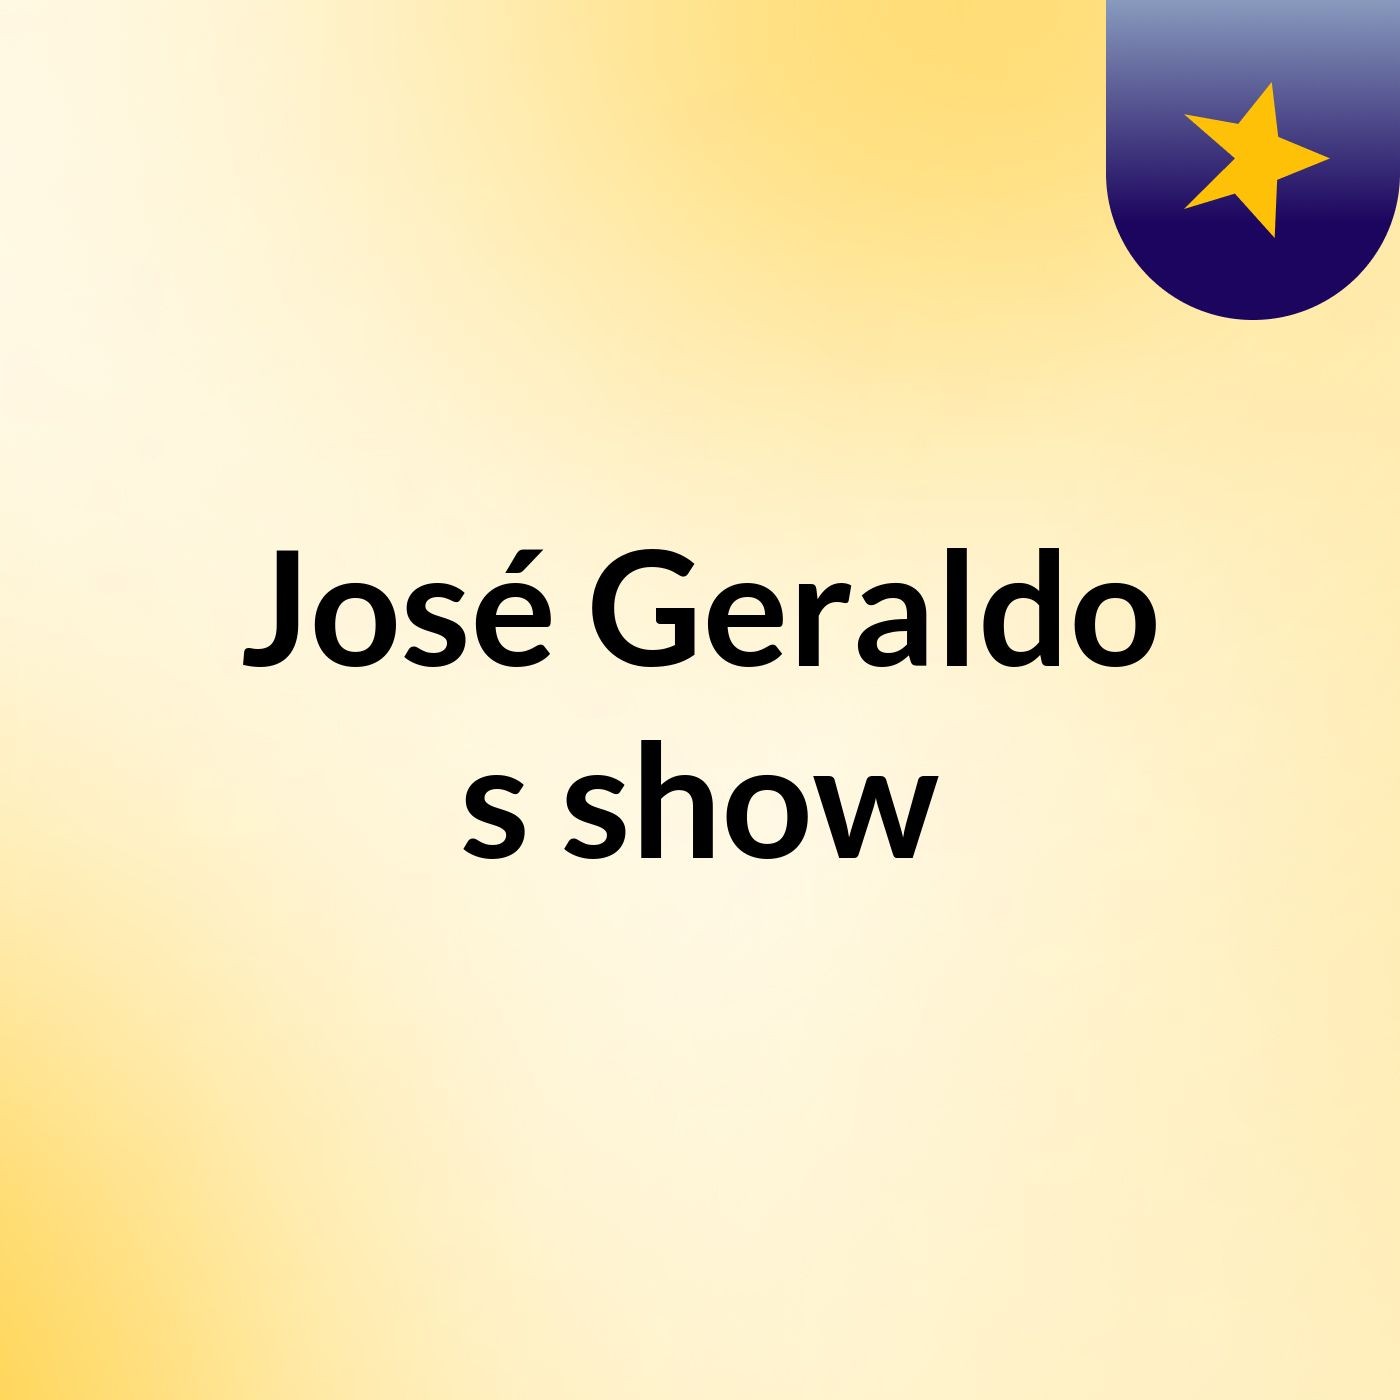 José Geraldo's show